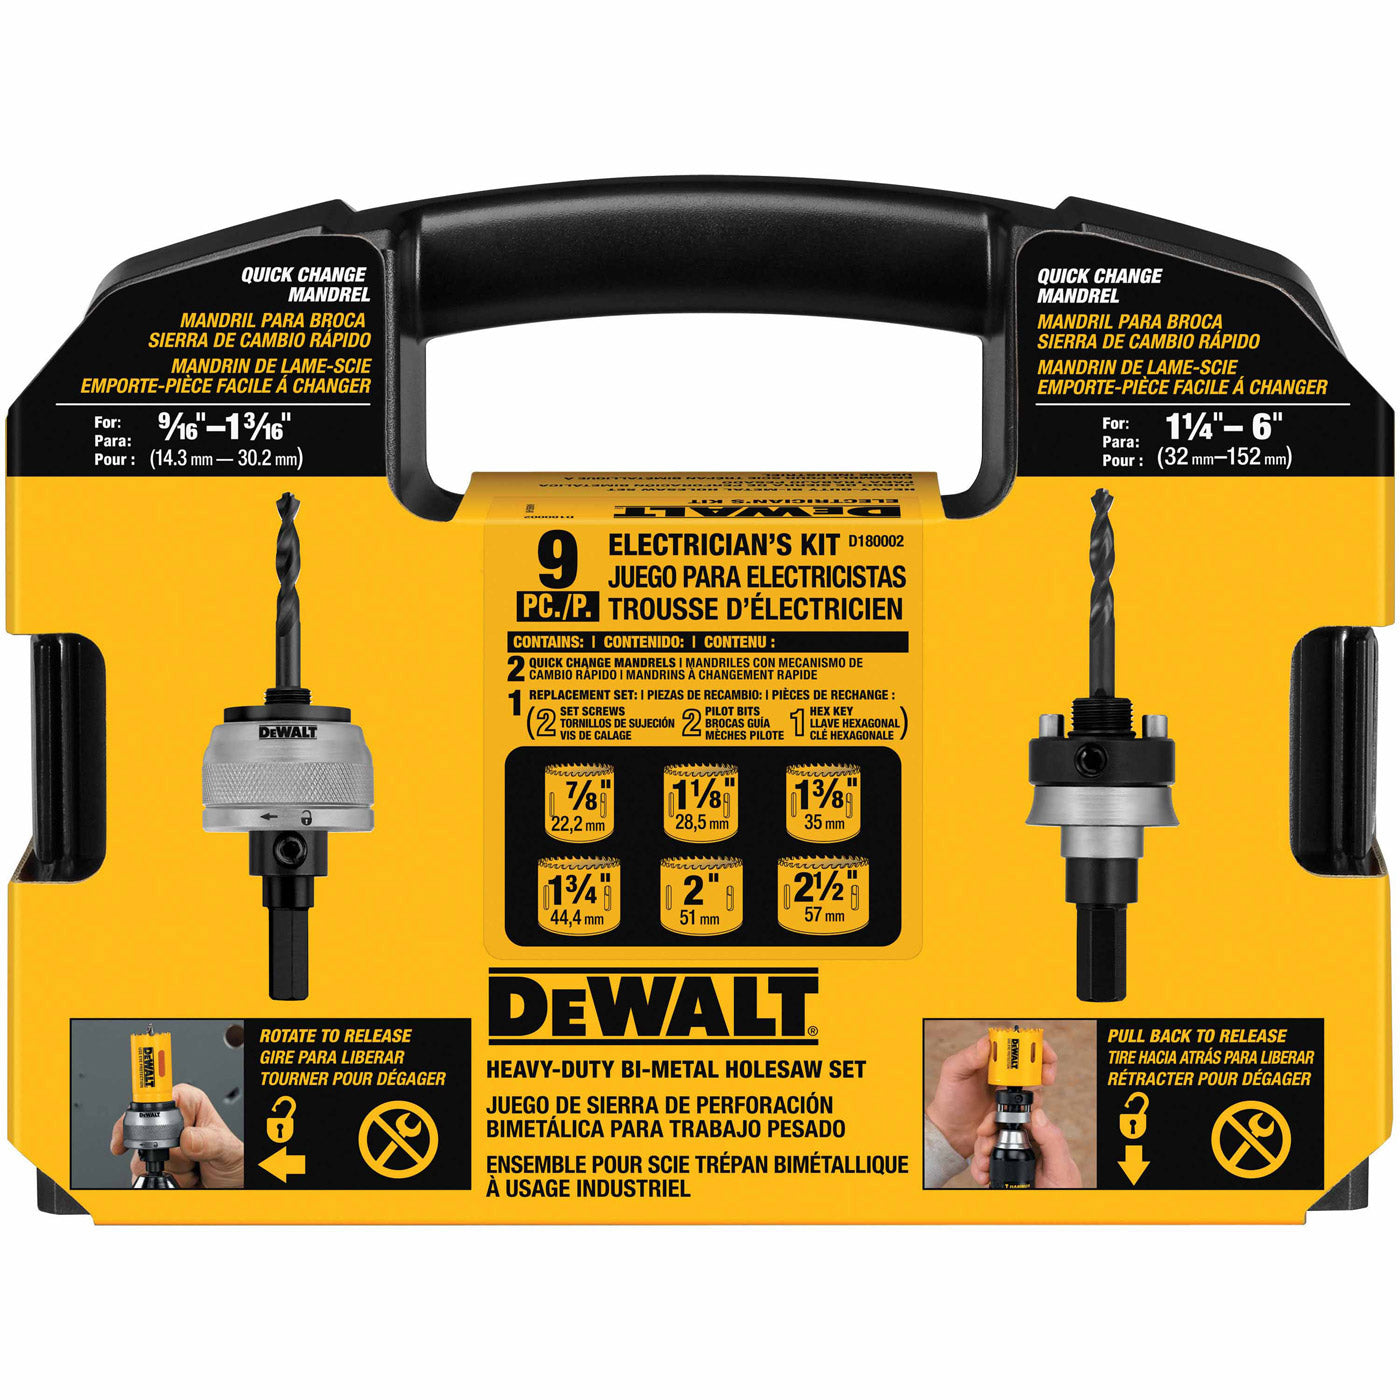 DeWalt D180002 9-Piece Electrician's Hole Saw Kit